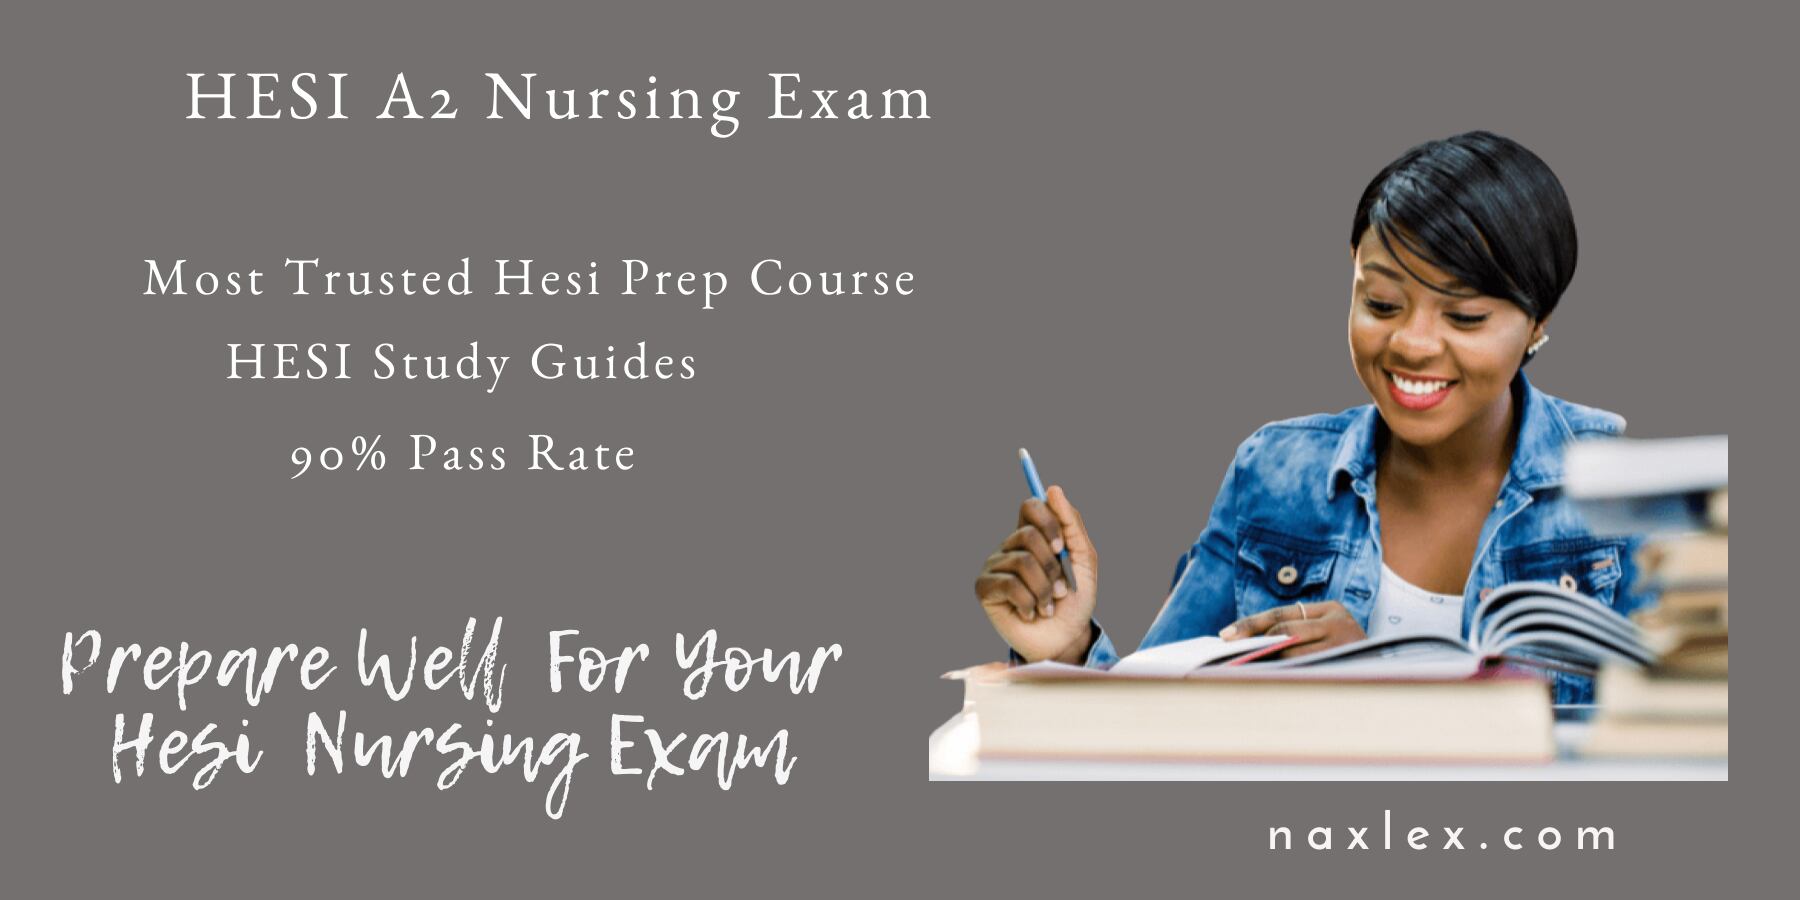 How-is-HESI-A2-Nursing-Exam-Scored